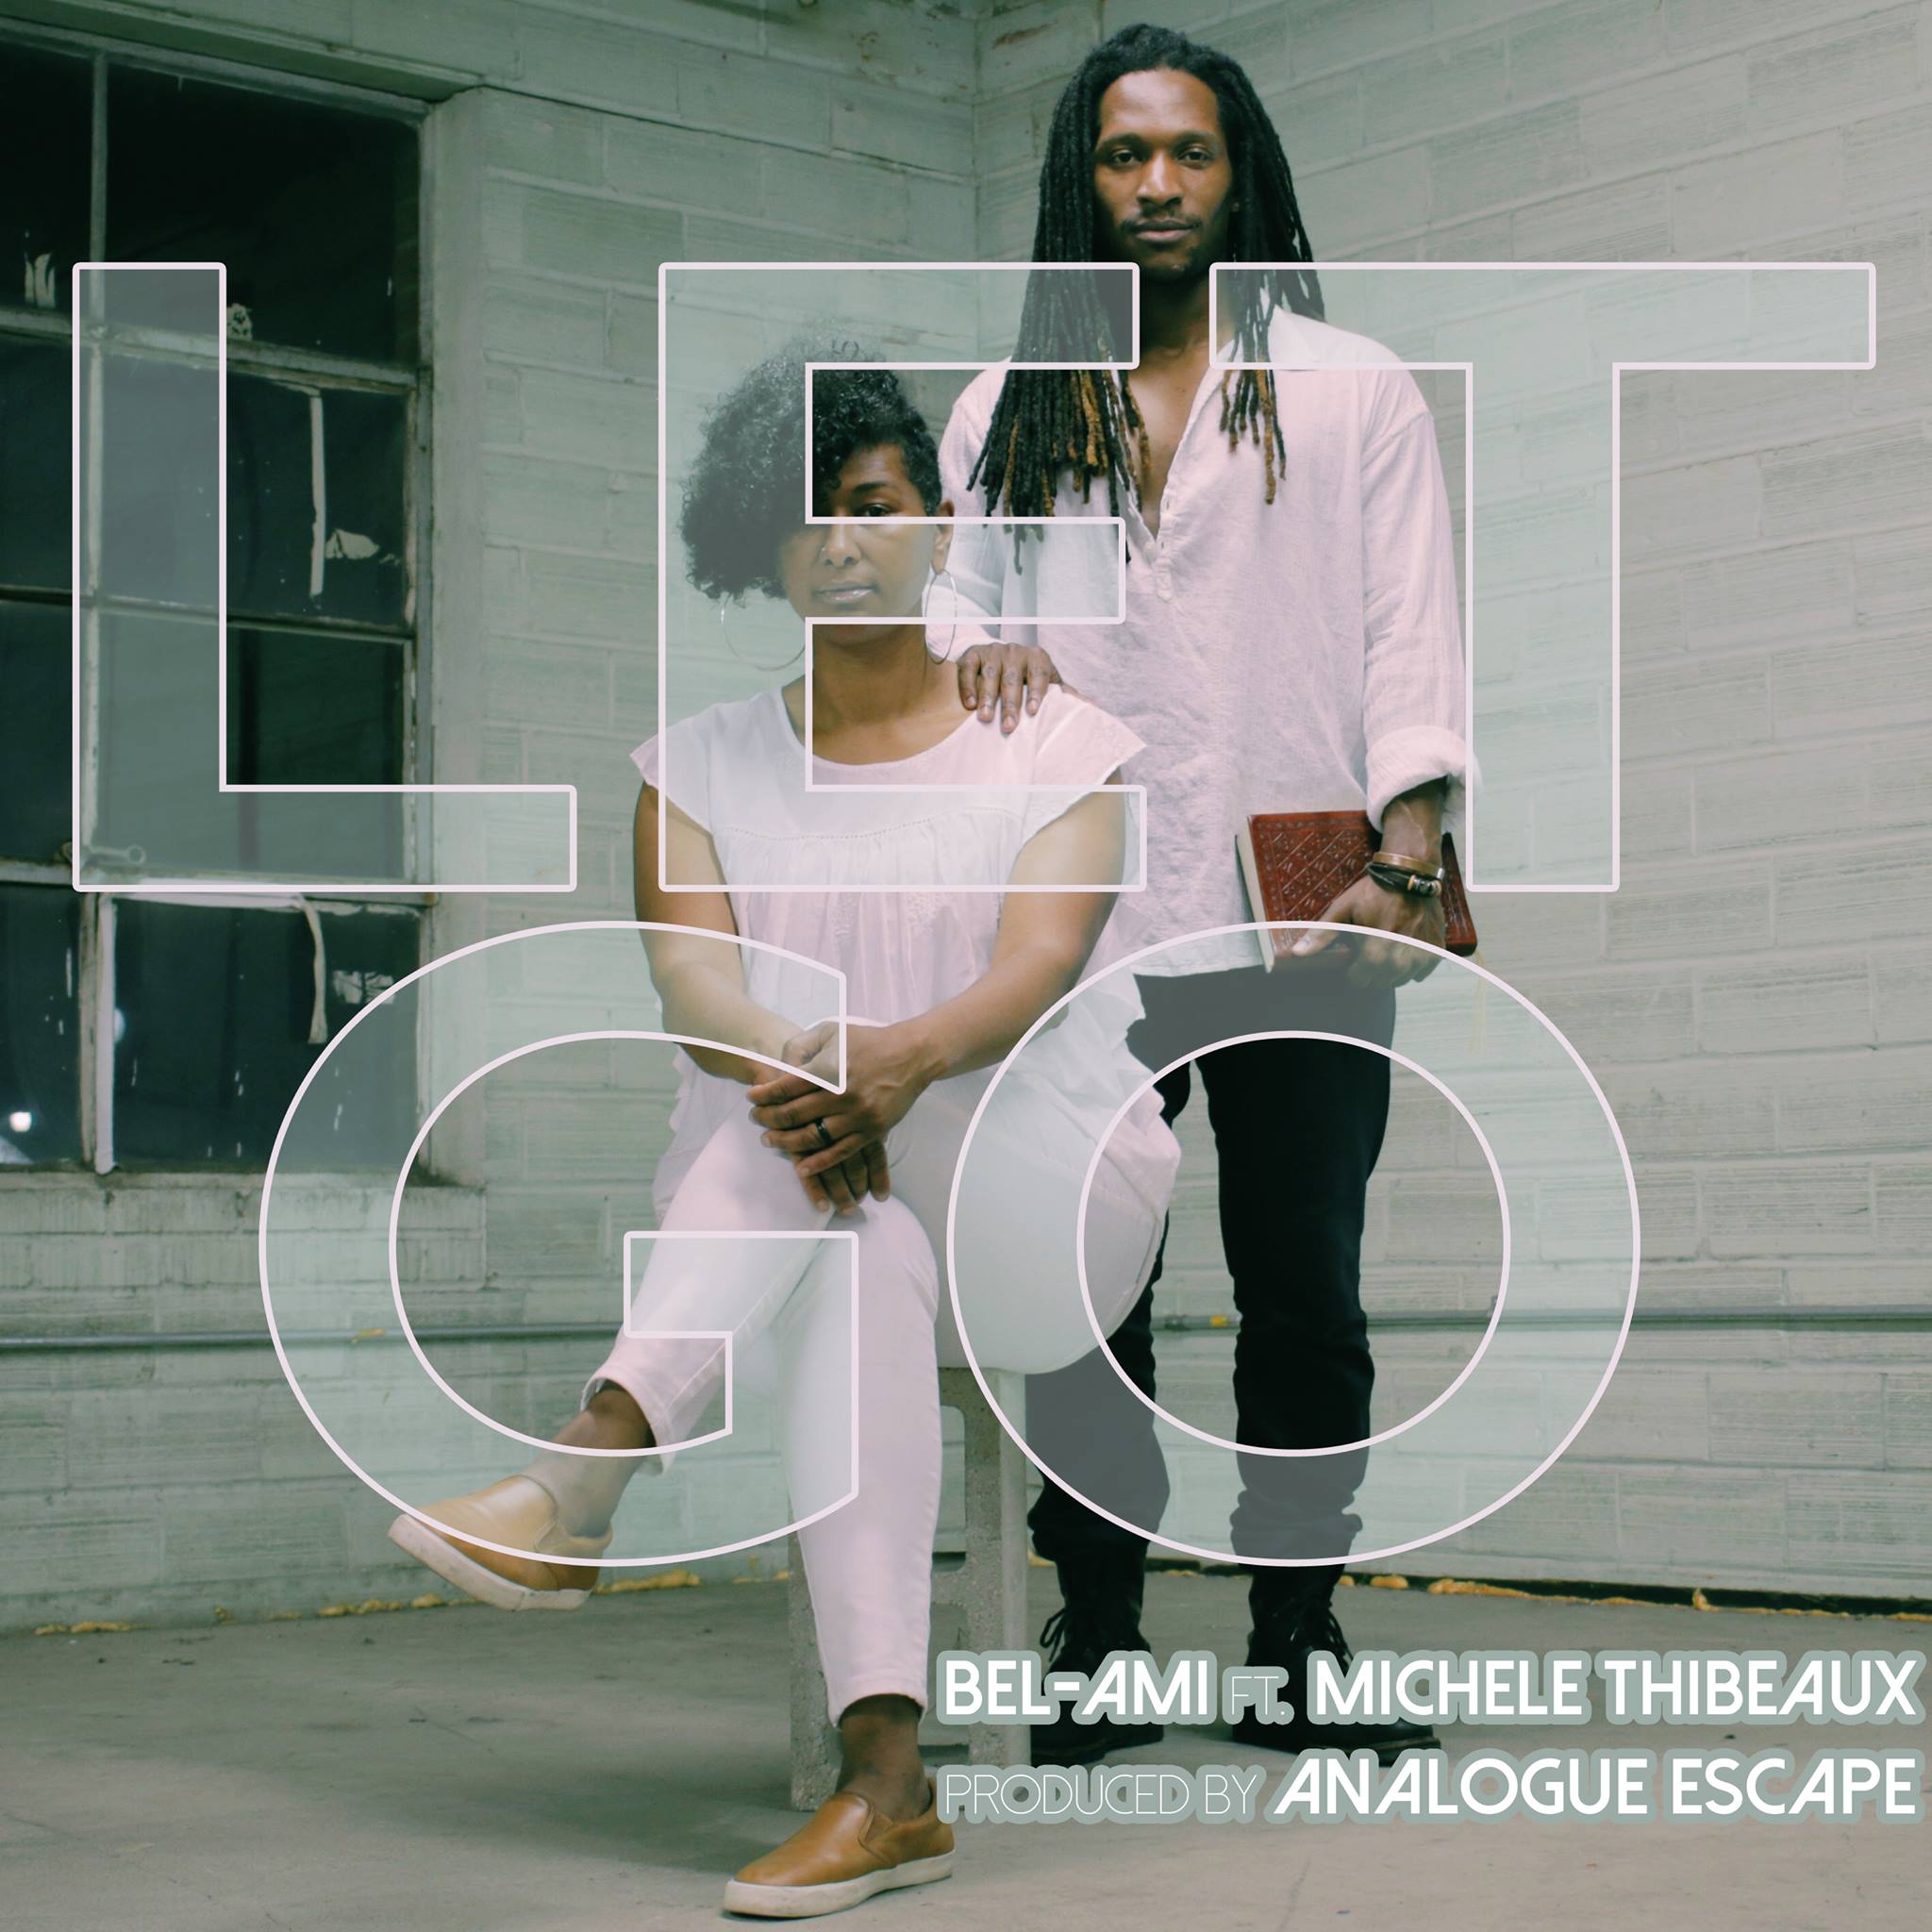 Bel-Ami “Let Go” featuring Michele Thibeaux